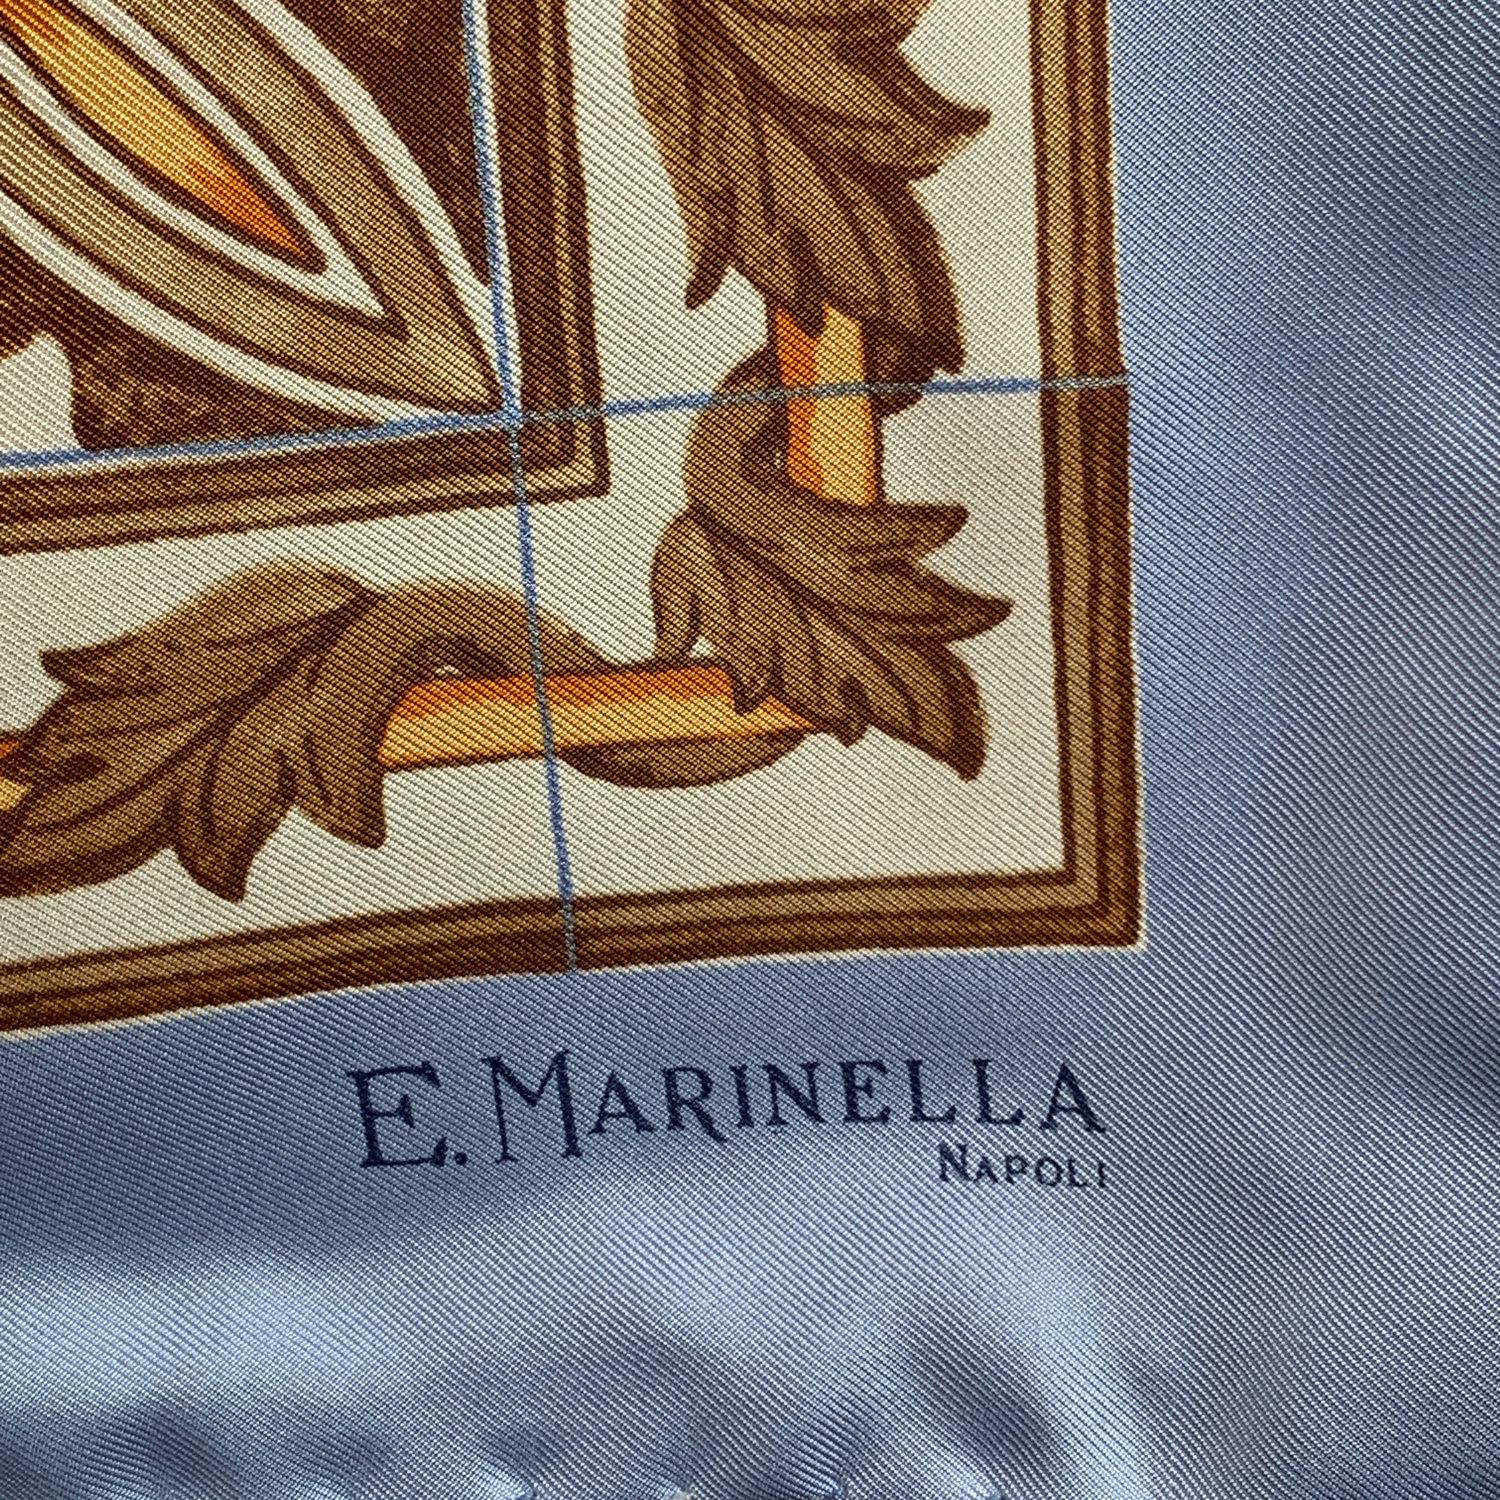 E. Marinella Napoli Vintage Silk Beige Scarf Grapes Pattern with Case 2